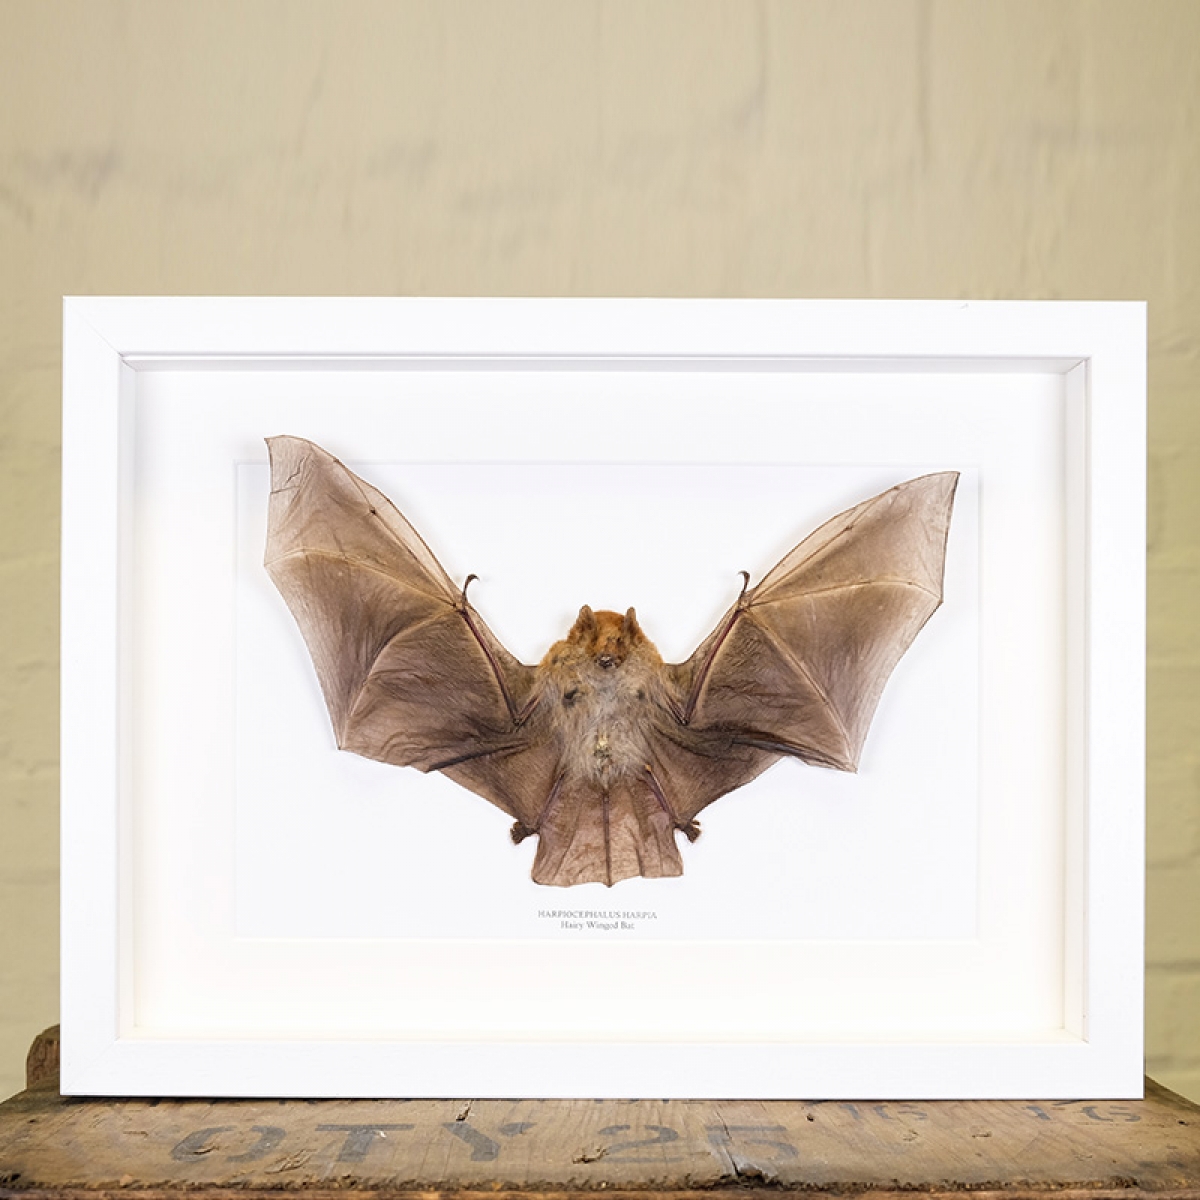 Taxidermy Hairy Winged Bat in Box Frame (Harpiocephalus harpia)